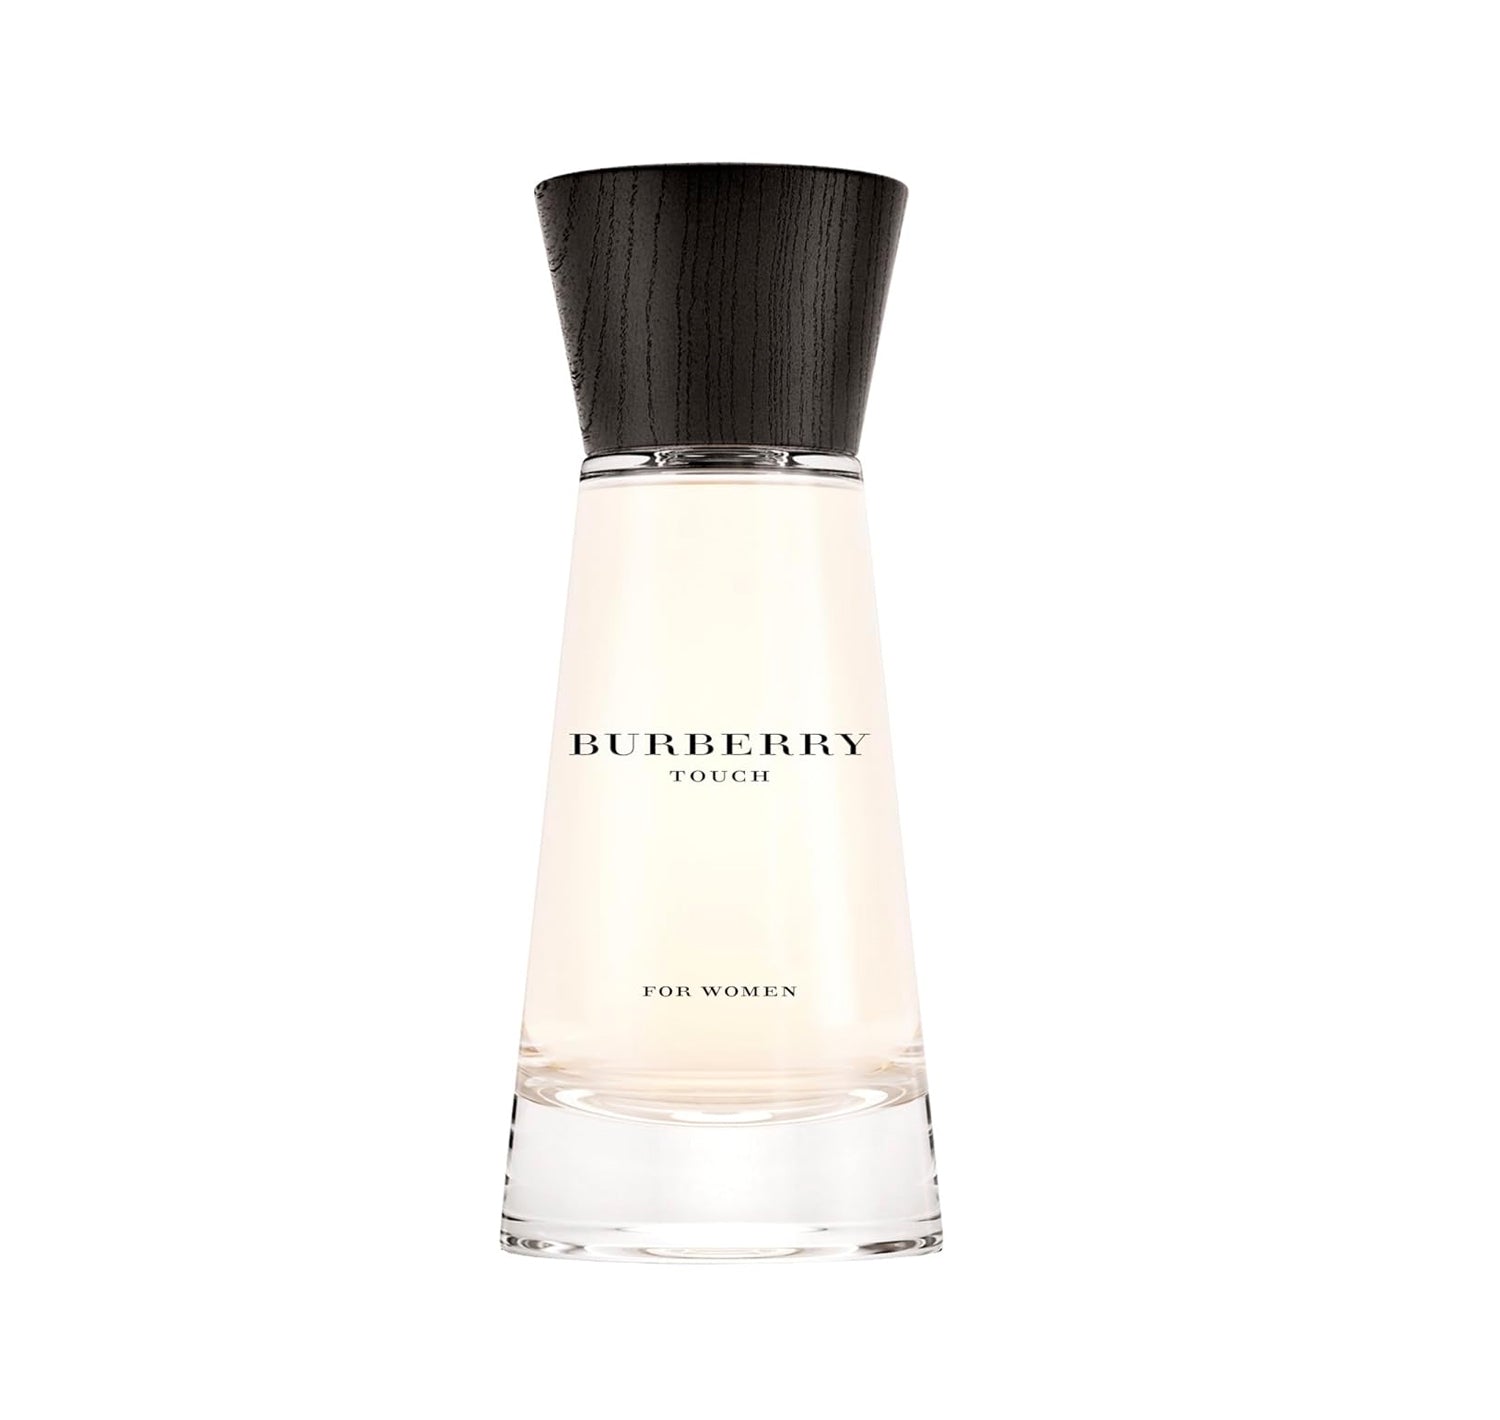 Burberry Touch Eau De Parfum Spray for Women